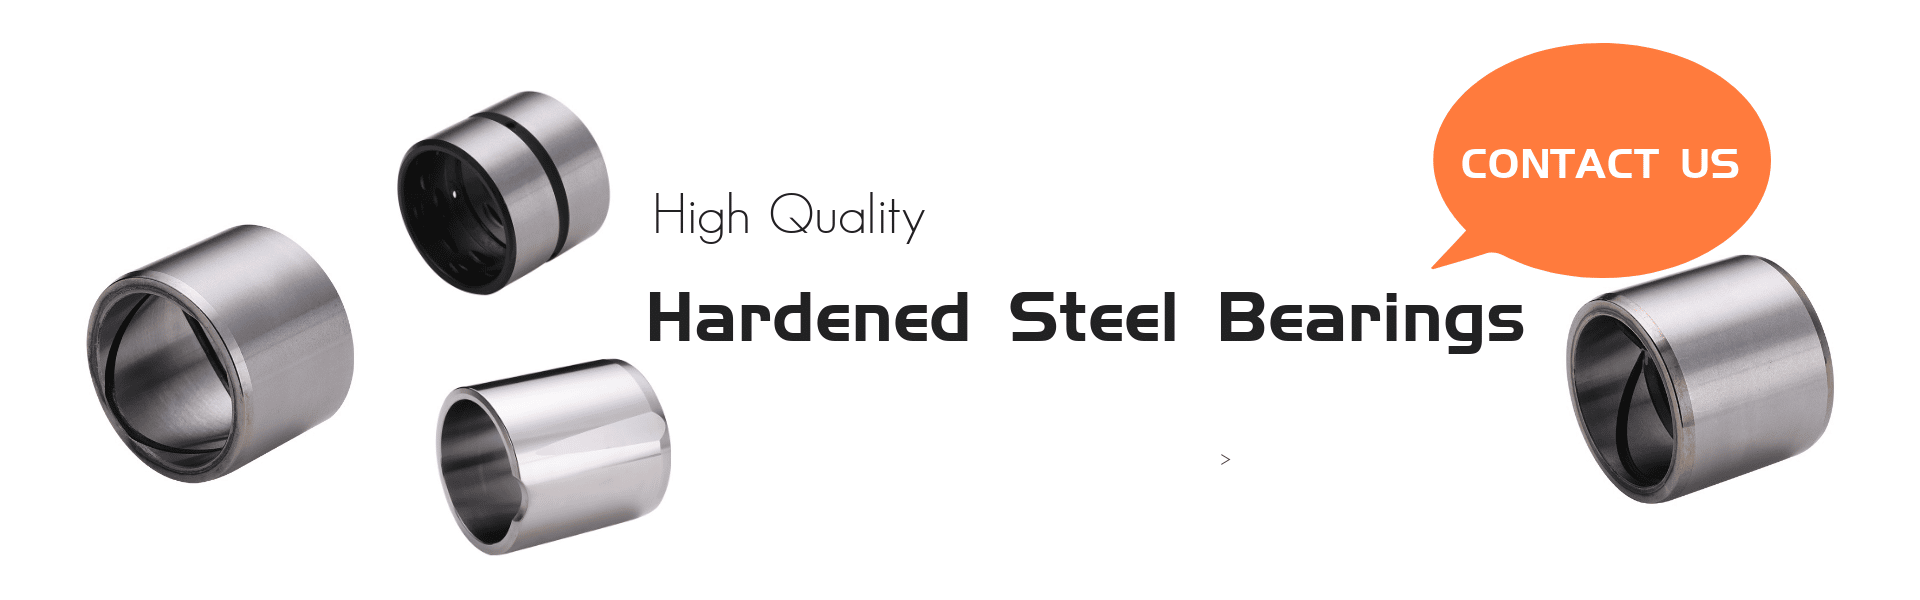 Hardened Steel Bearings